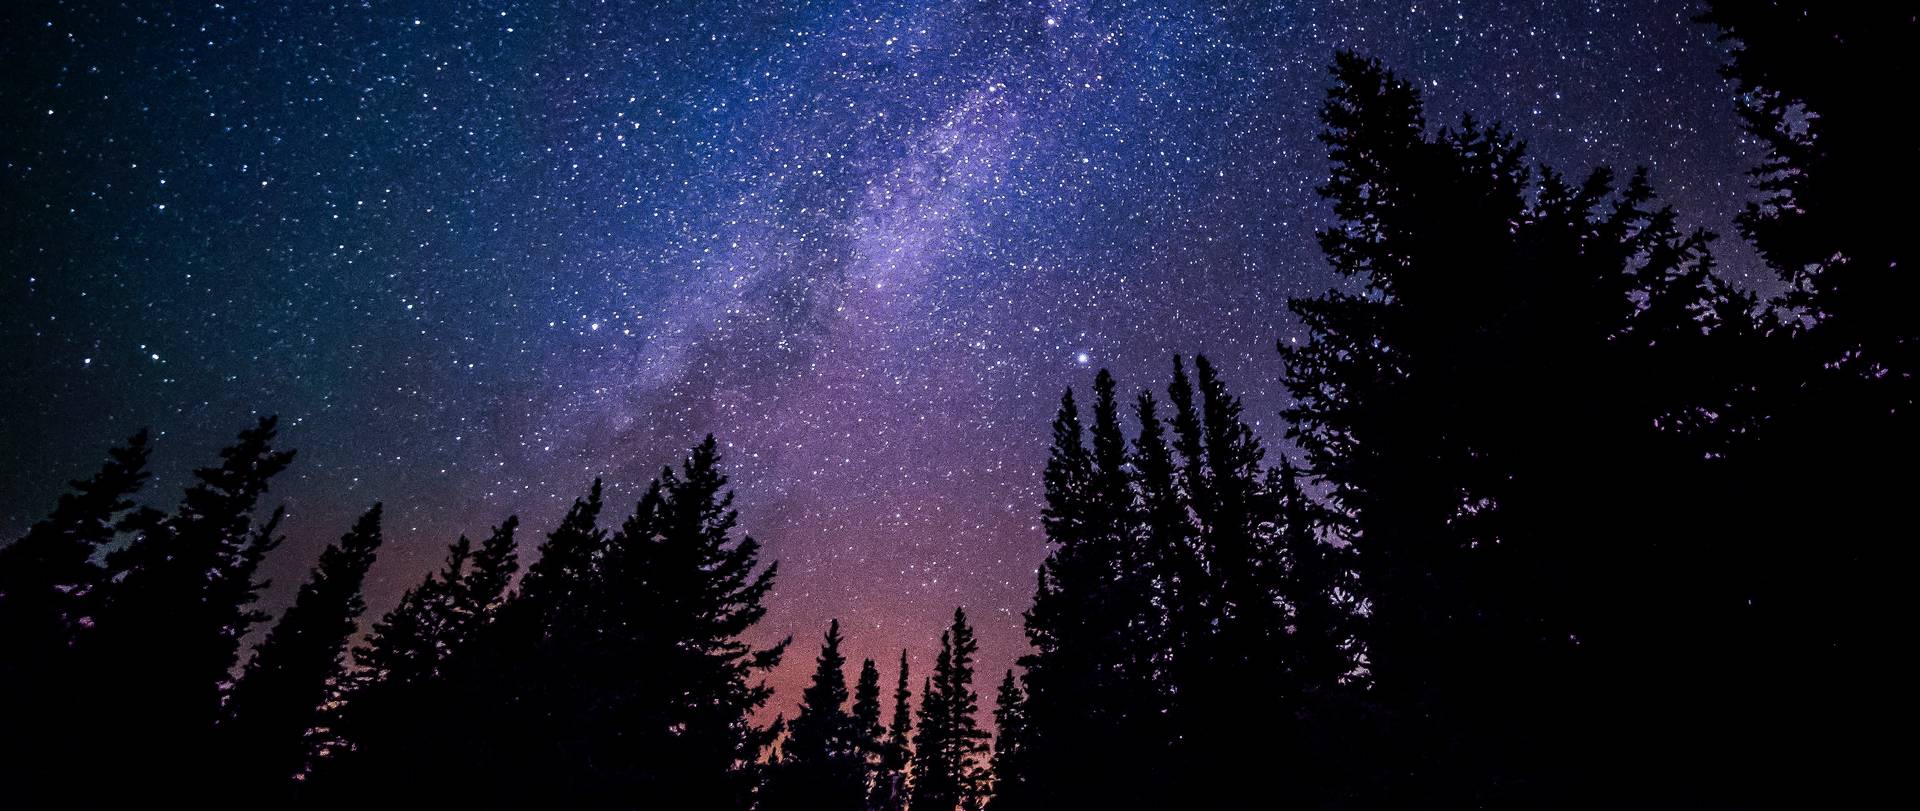 Stars over a forest. Photographer: Ryan Hutton. Licensed (Jztmx9yqjBw)